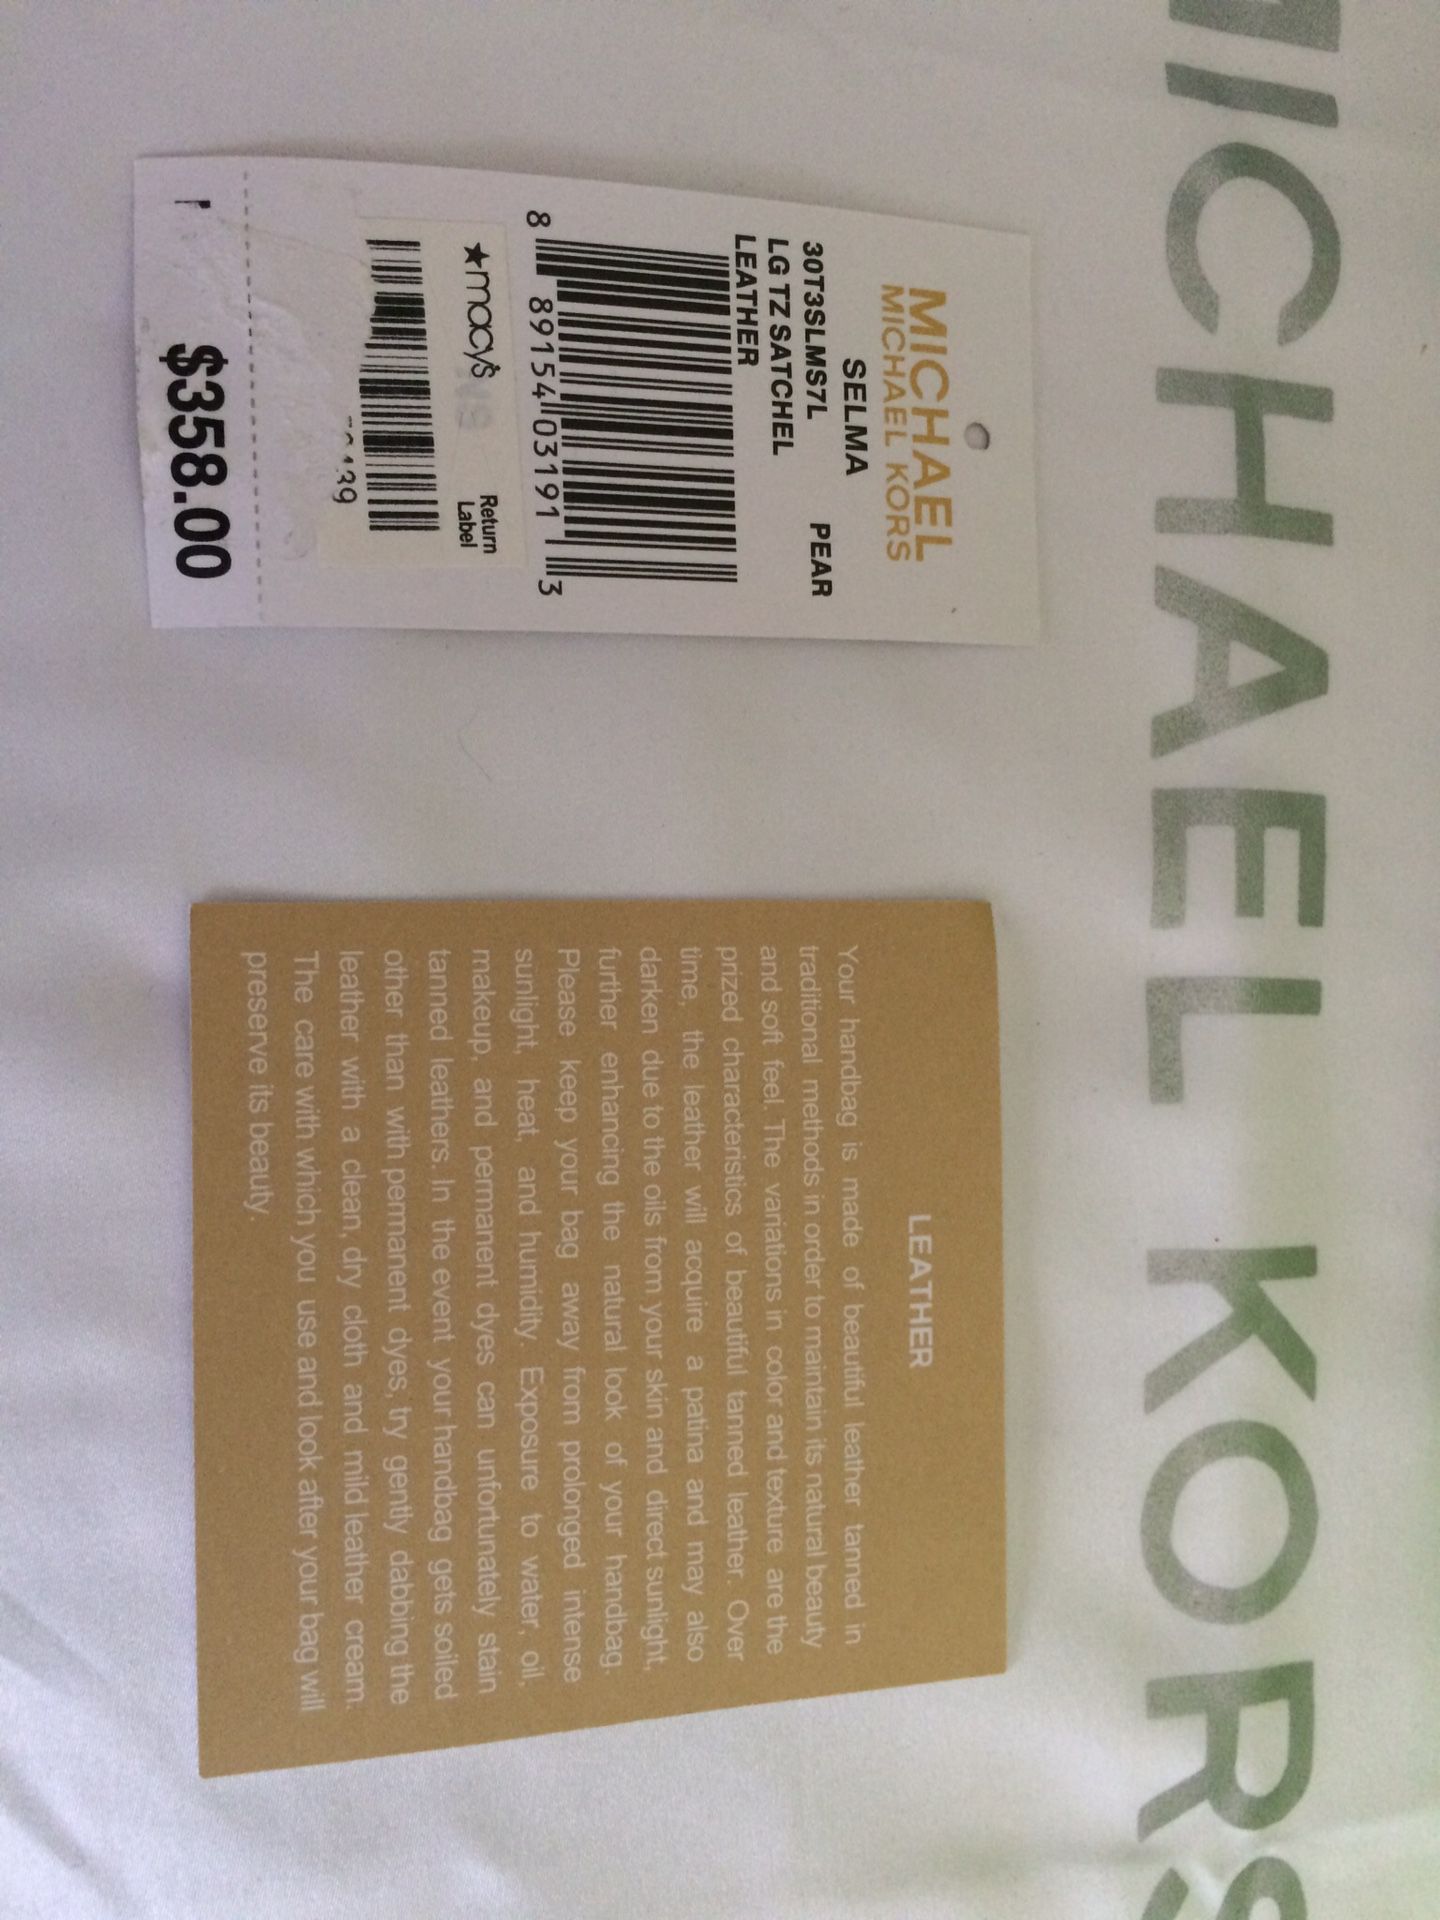 Michael Kors Selma Satchel for Sale in Avon Lake, OH - OfferUp